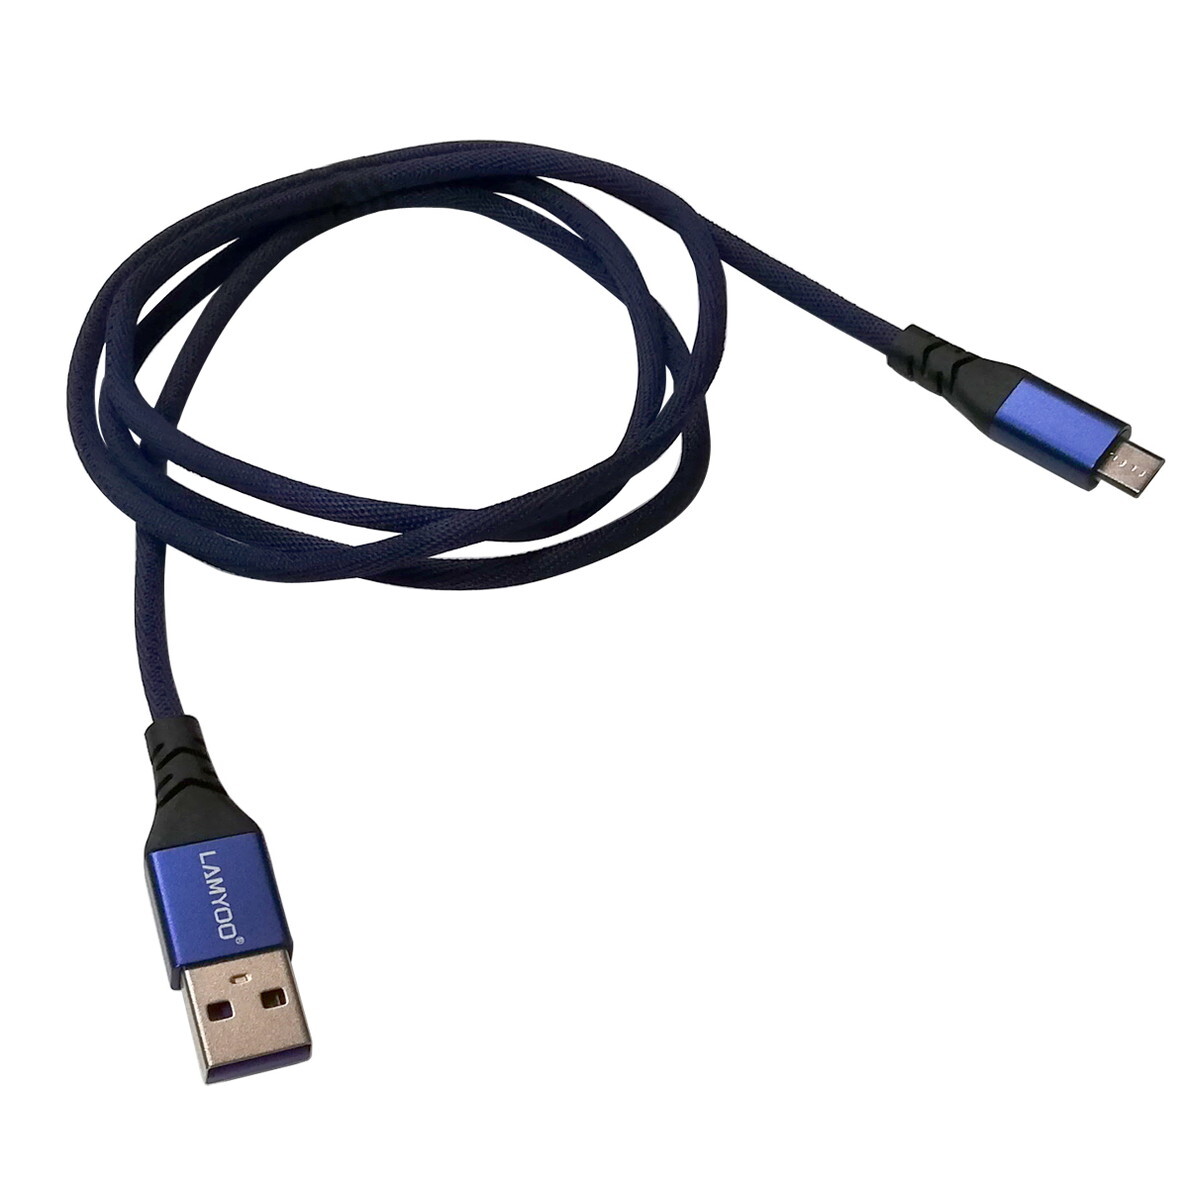 USB マイクロUSB 充電 ケーブル 1m 青色 microUSB 急速充電 データ転送対応 3A_画像1